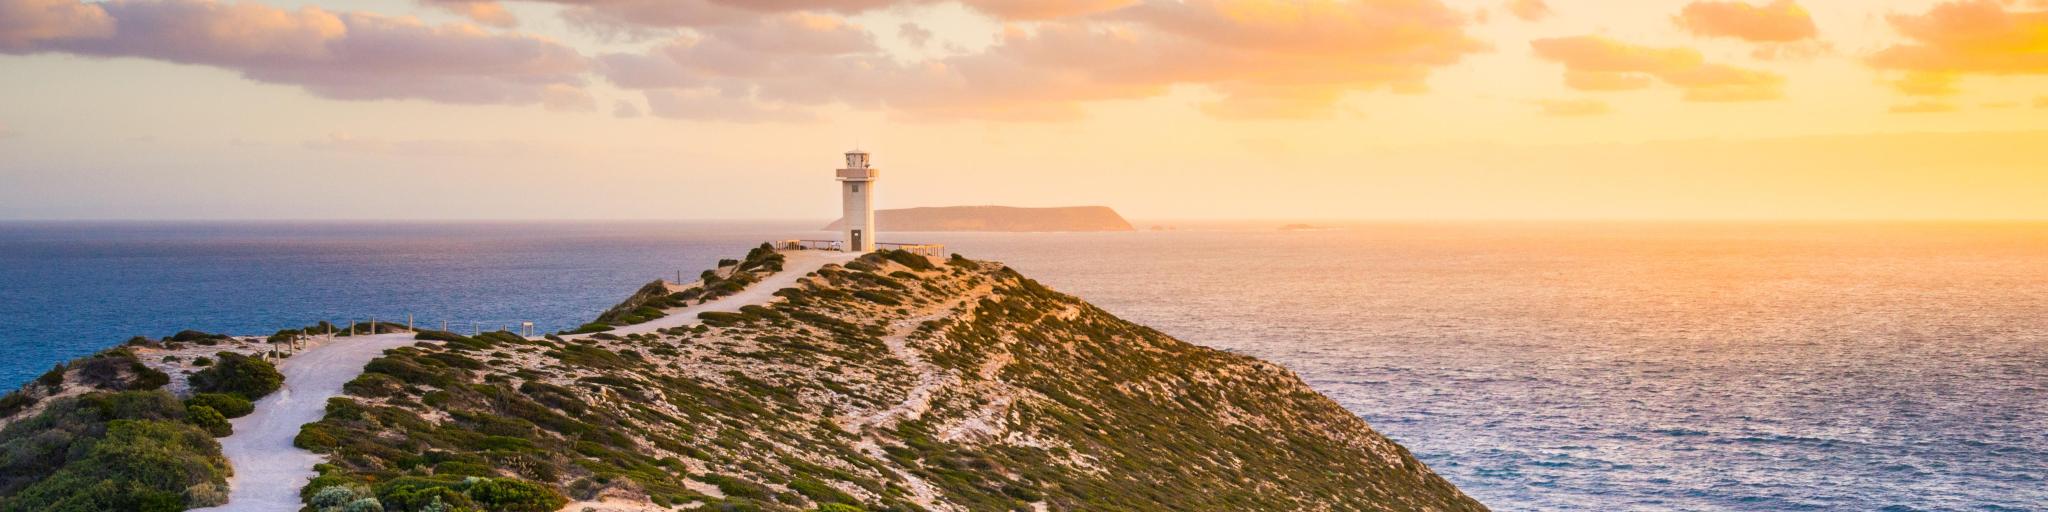 Cape Spencer Lighthouse in Innes National Park in South Australia during sunset